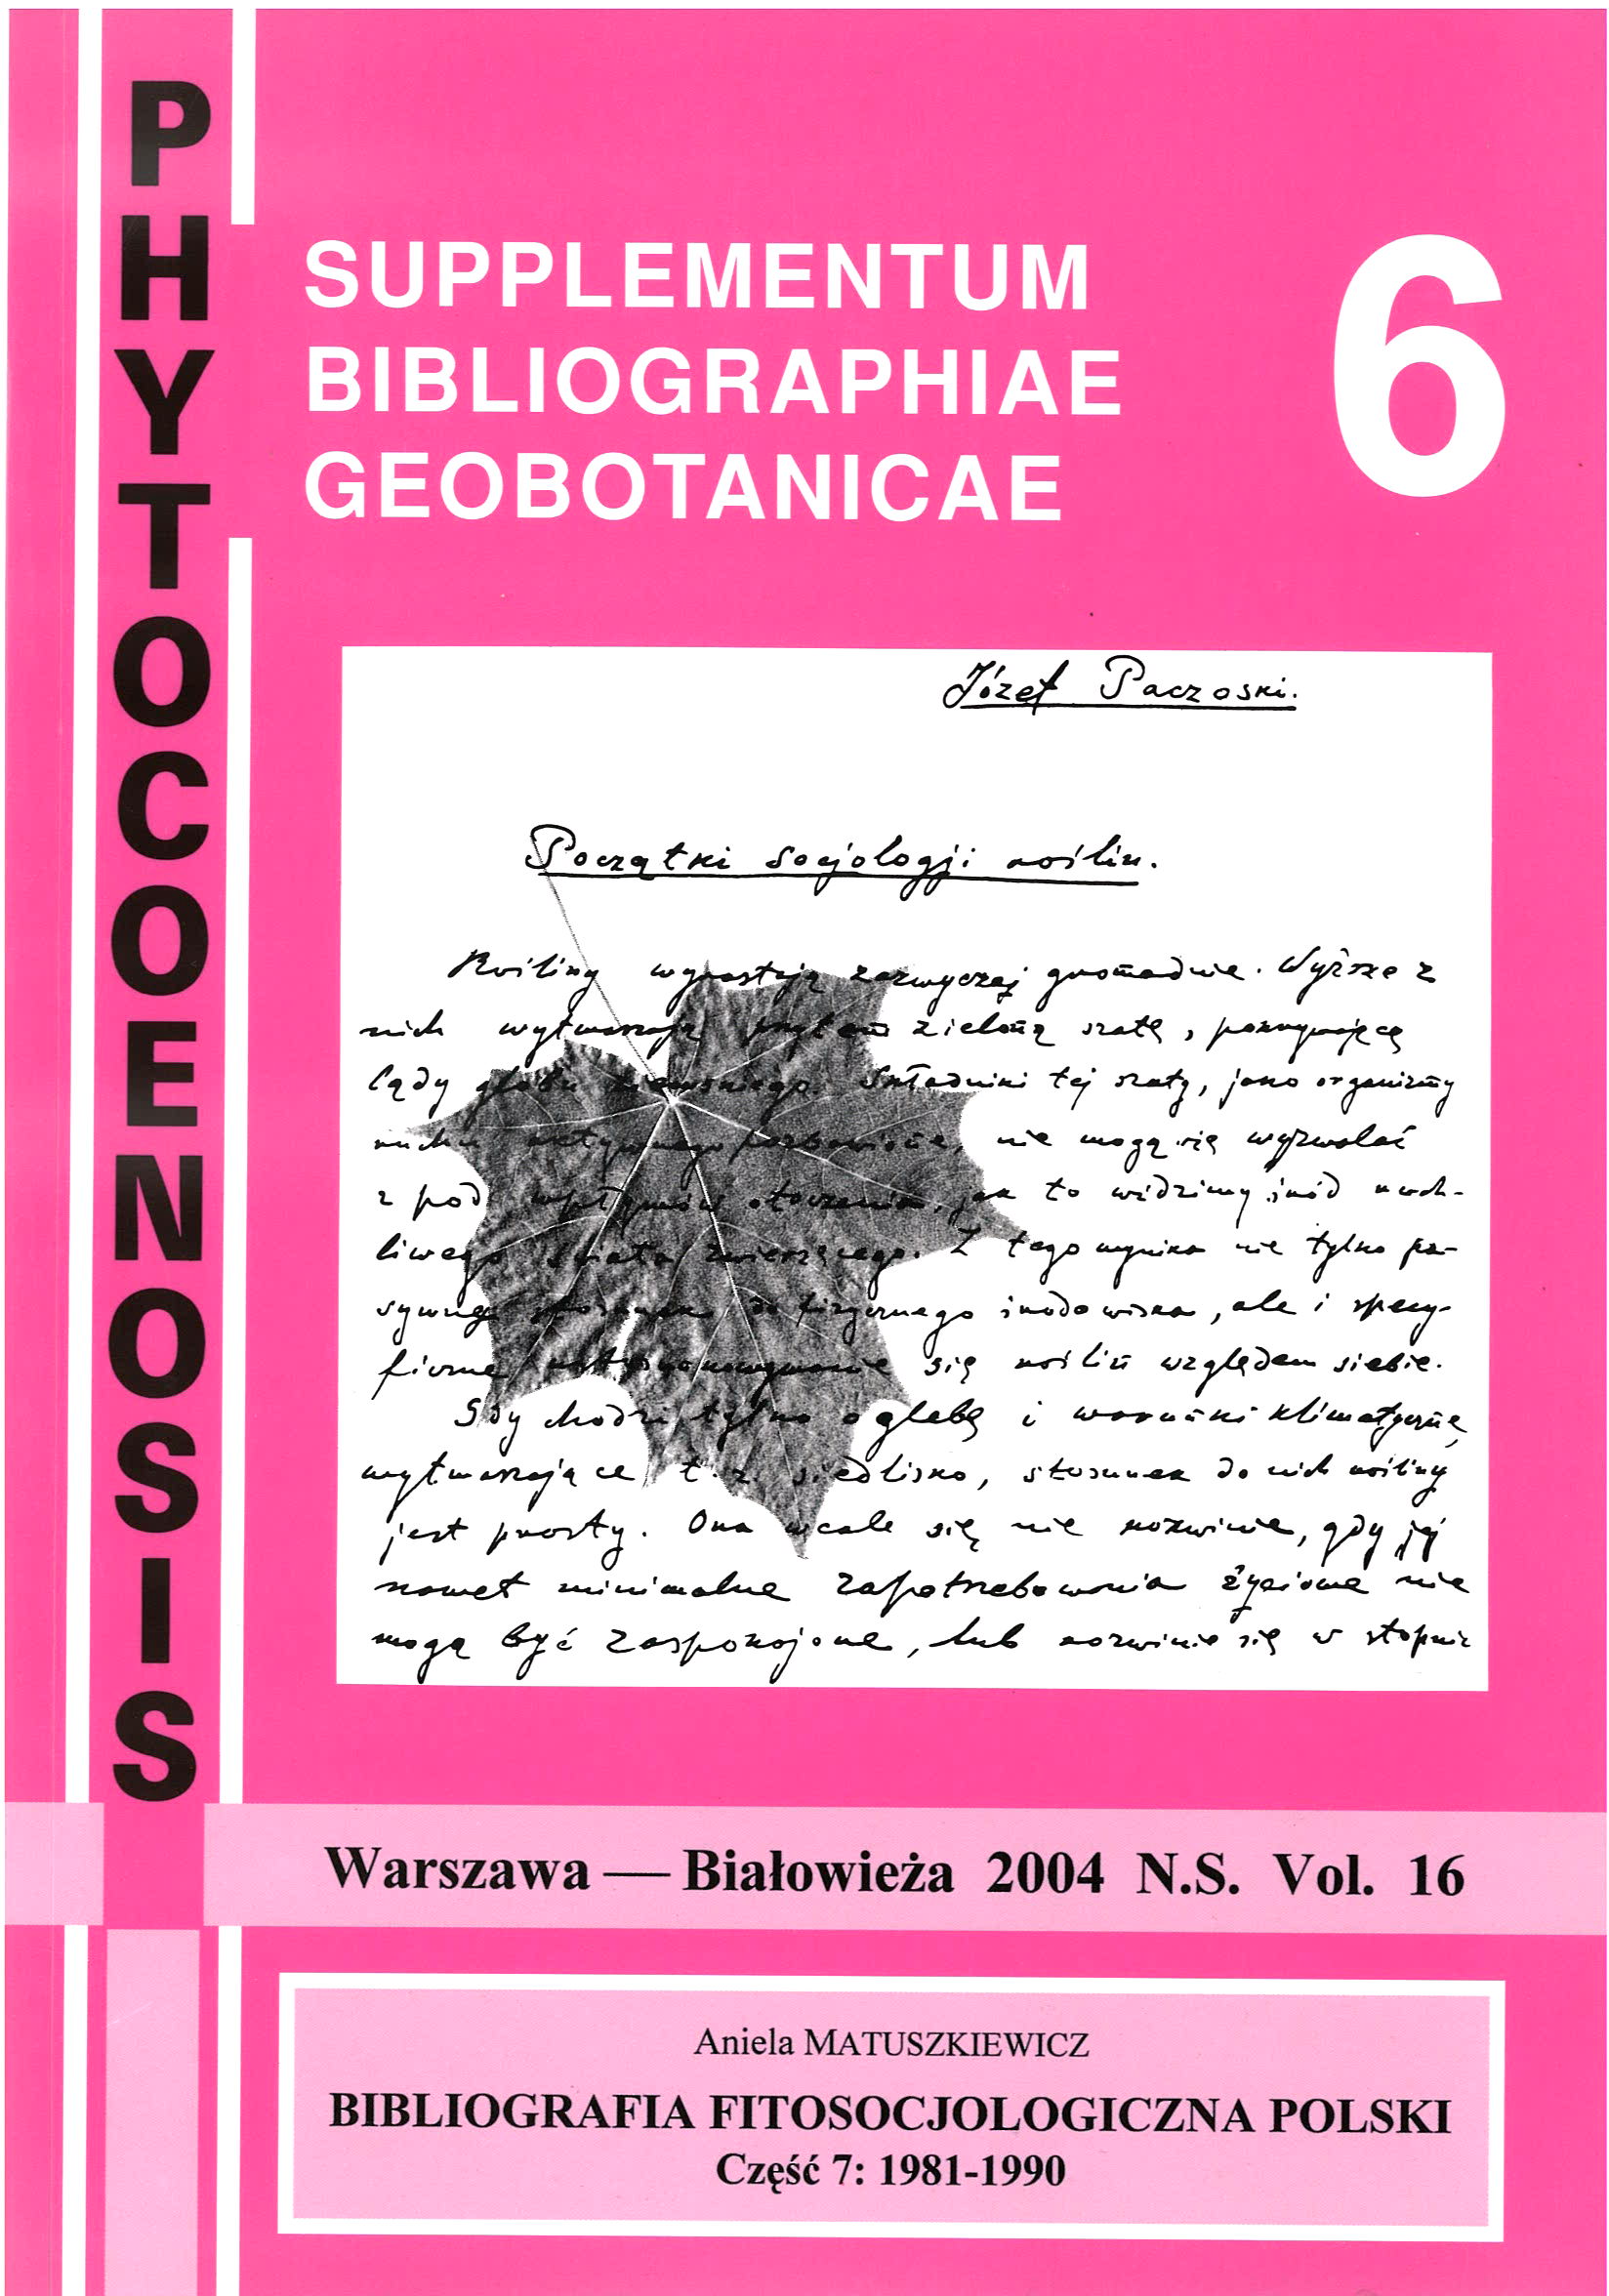 Phytocoenosis (N.S.) 16, Supplementum Bibliographiae Geobotanicae 10